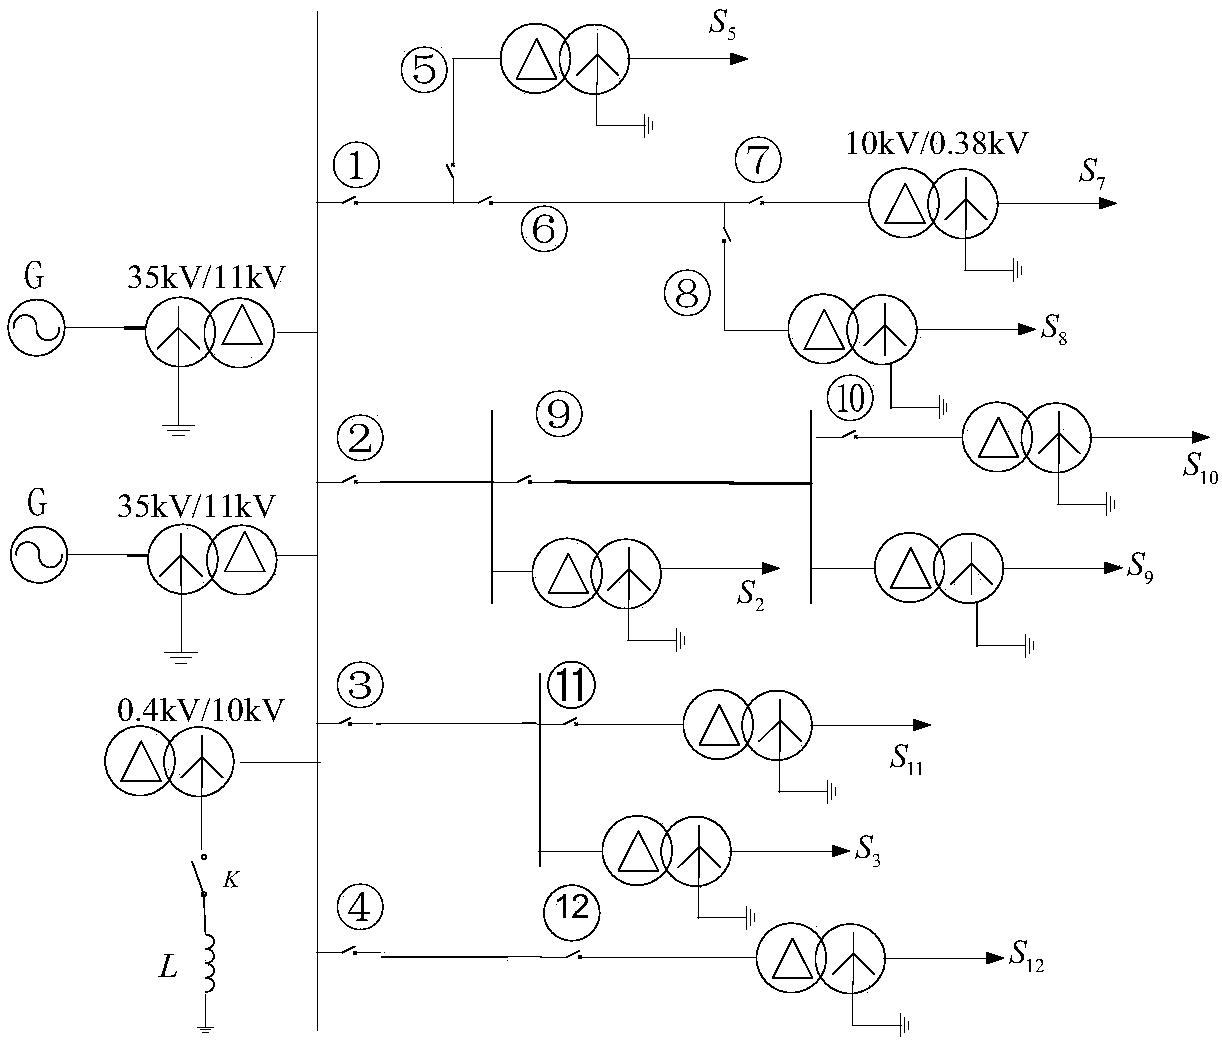 Resonance grounding system single phase grounding fault section positioning method utilizing phase voltage current break variable phase characteristics